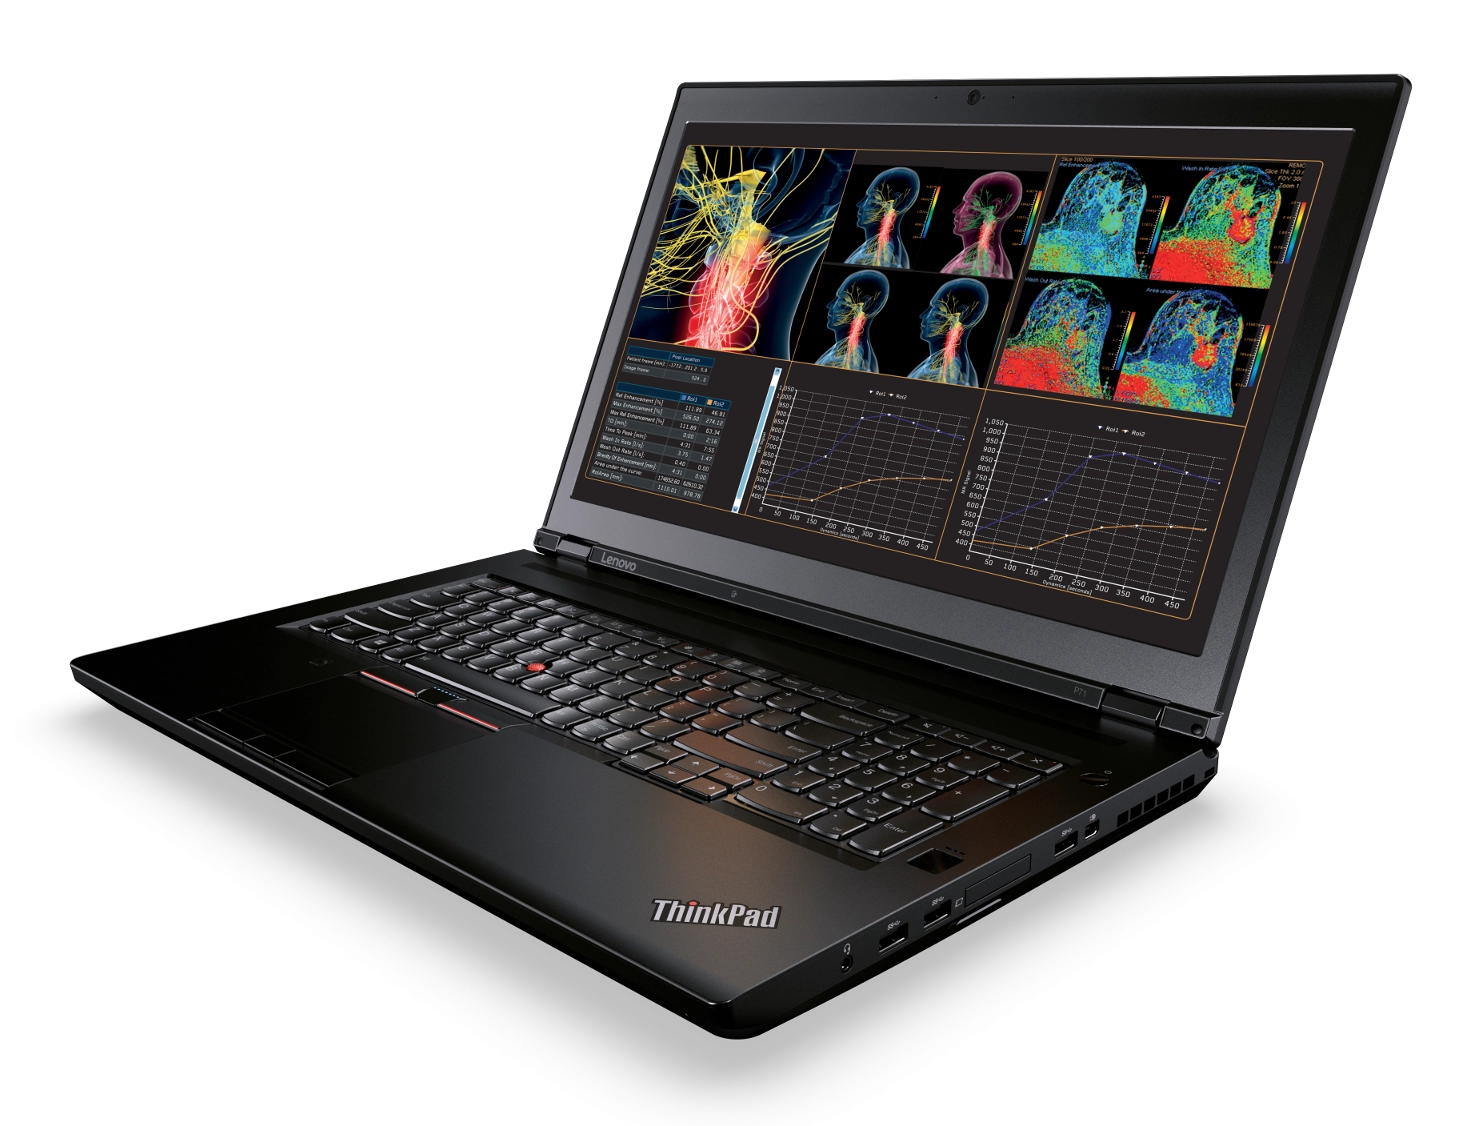 Lenovo ThinkPad P71 laptop image